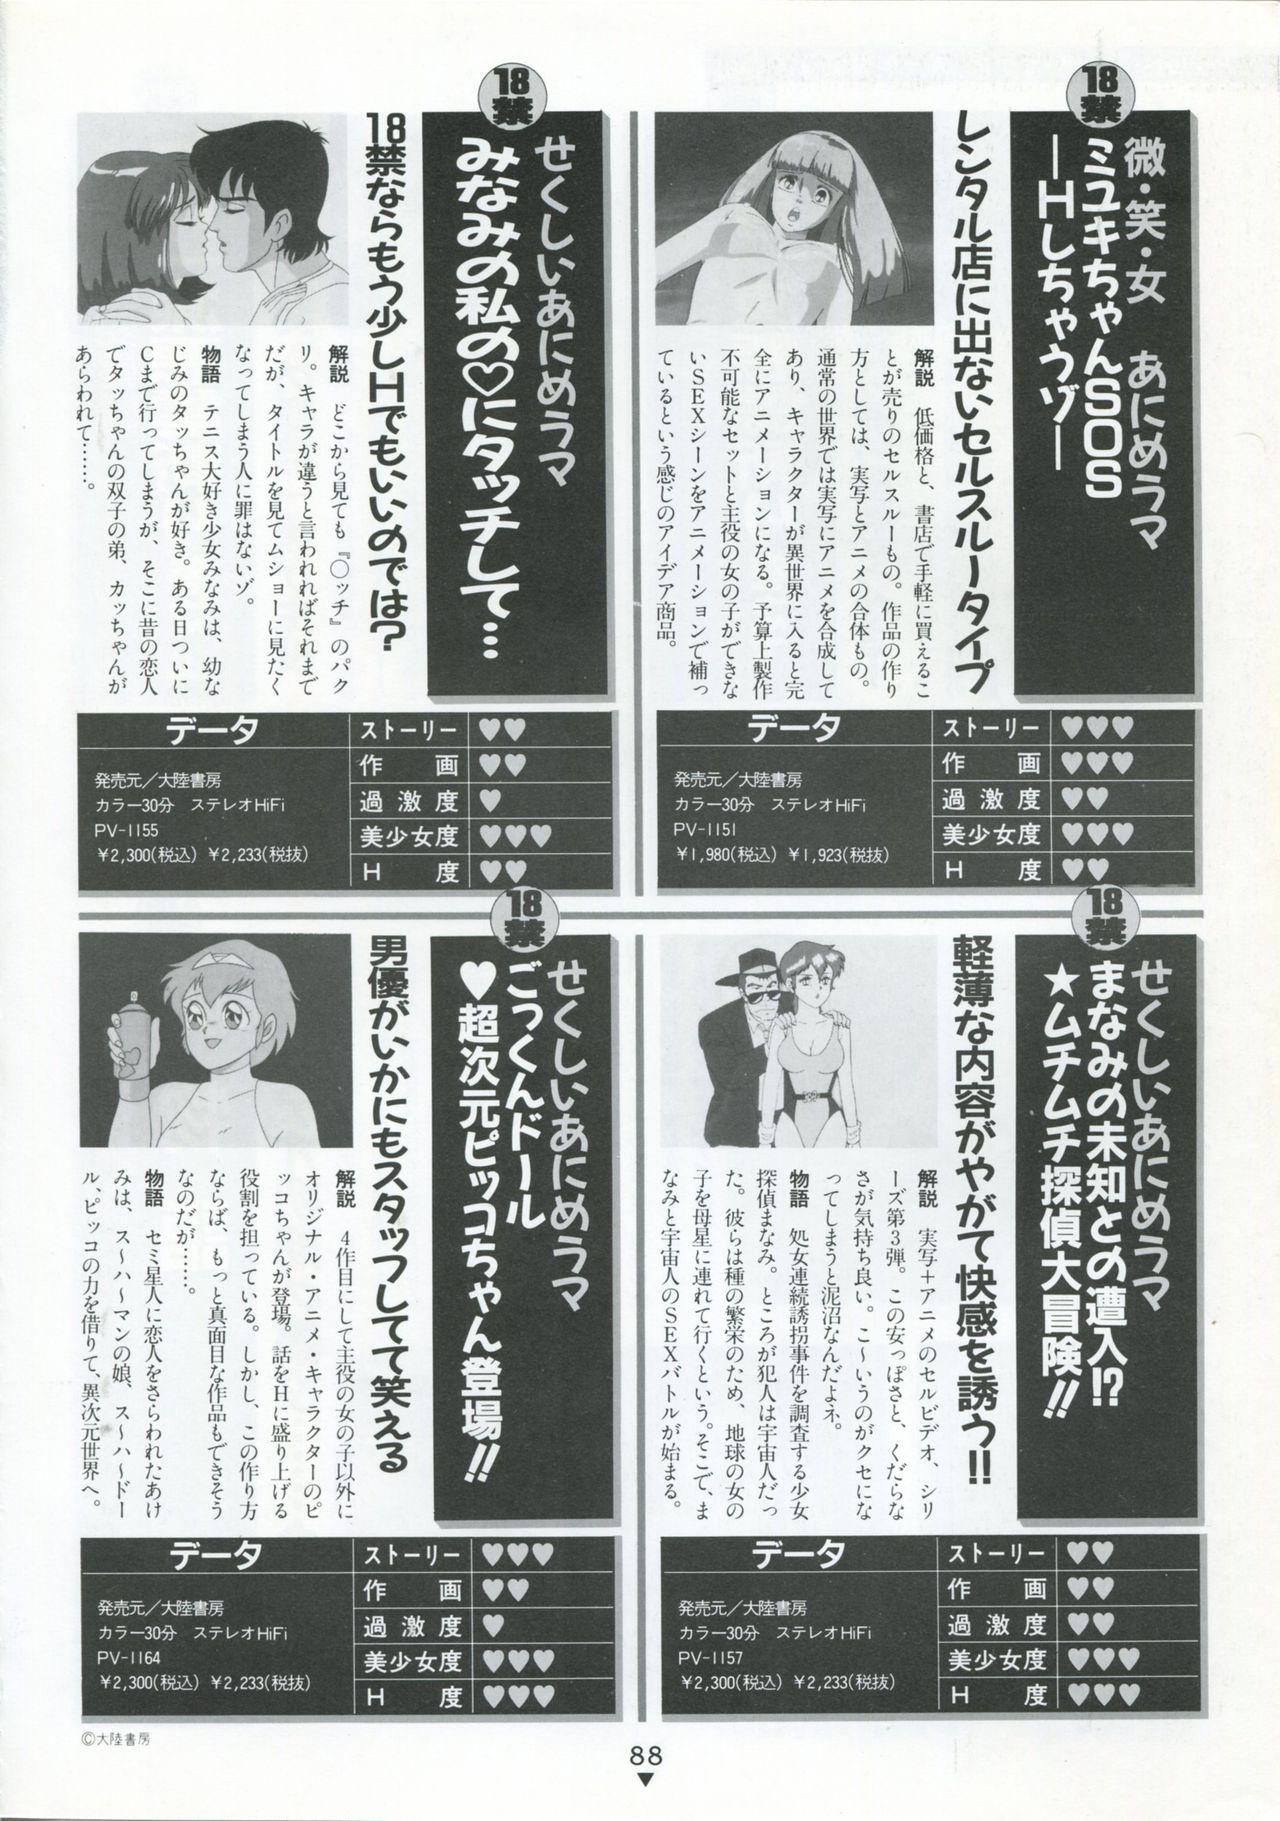 Bishoujo Anime Daizenshuu - Adult Animation Video Catalog 1991 83